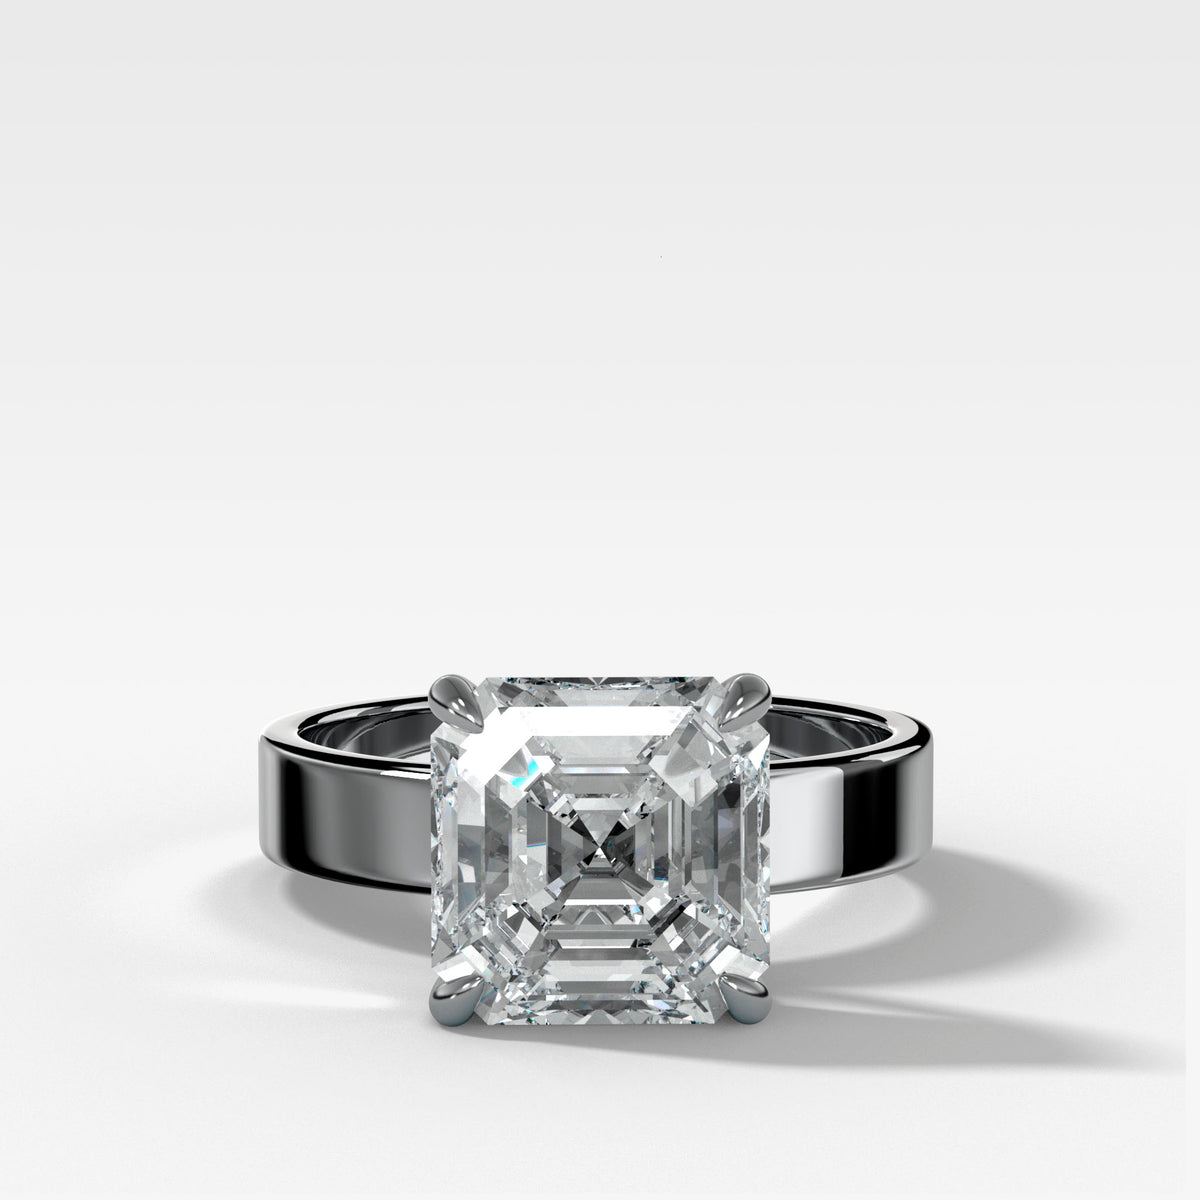 Finest Solitaire Engagement Ring With Asscher Cut Diamond